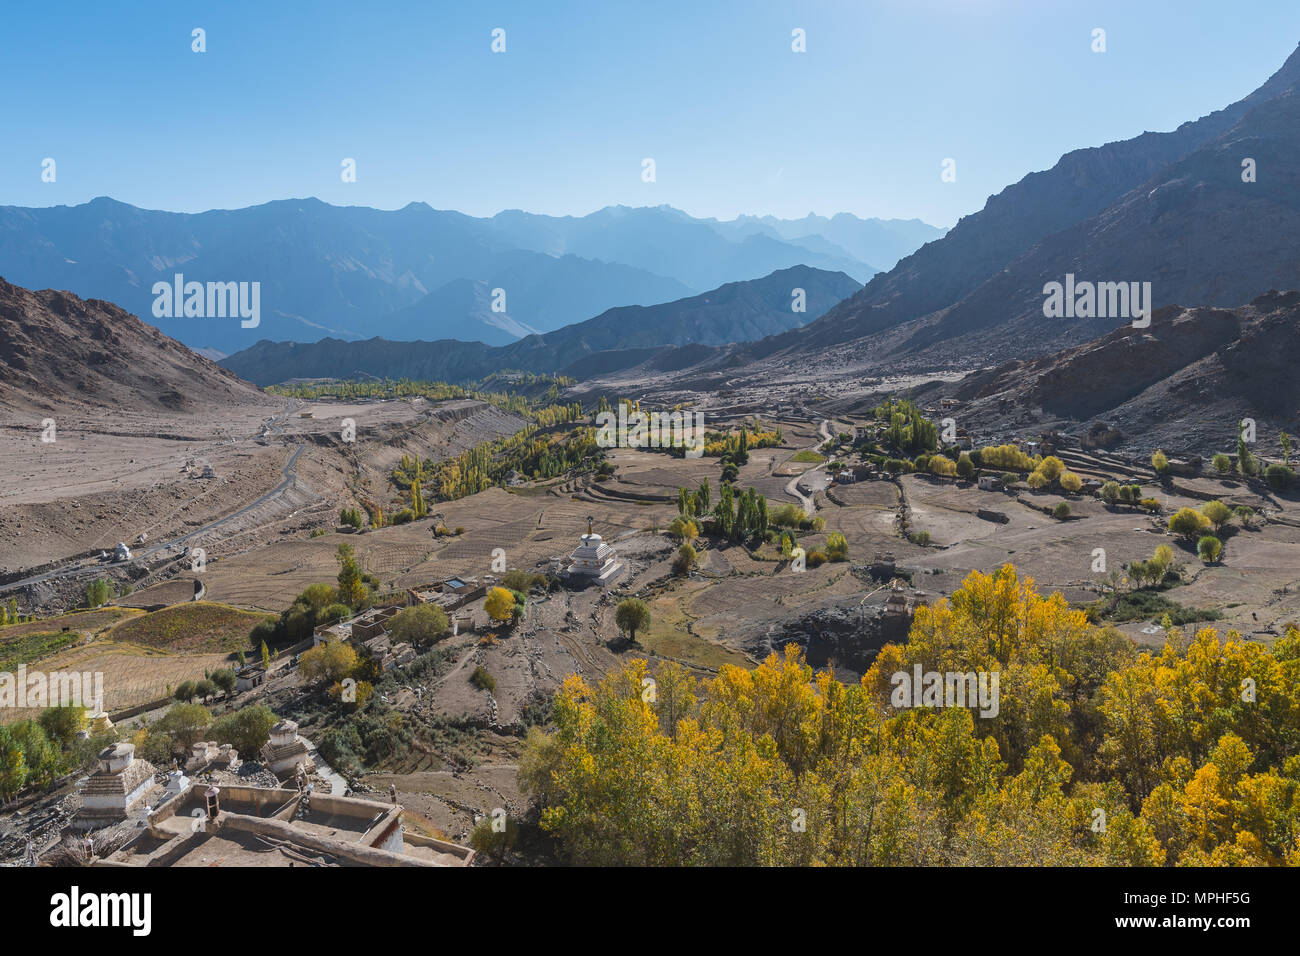 Arid landscape view from Lamayuru monastery. Leh Ladakh, India Stock Photo